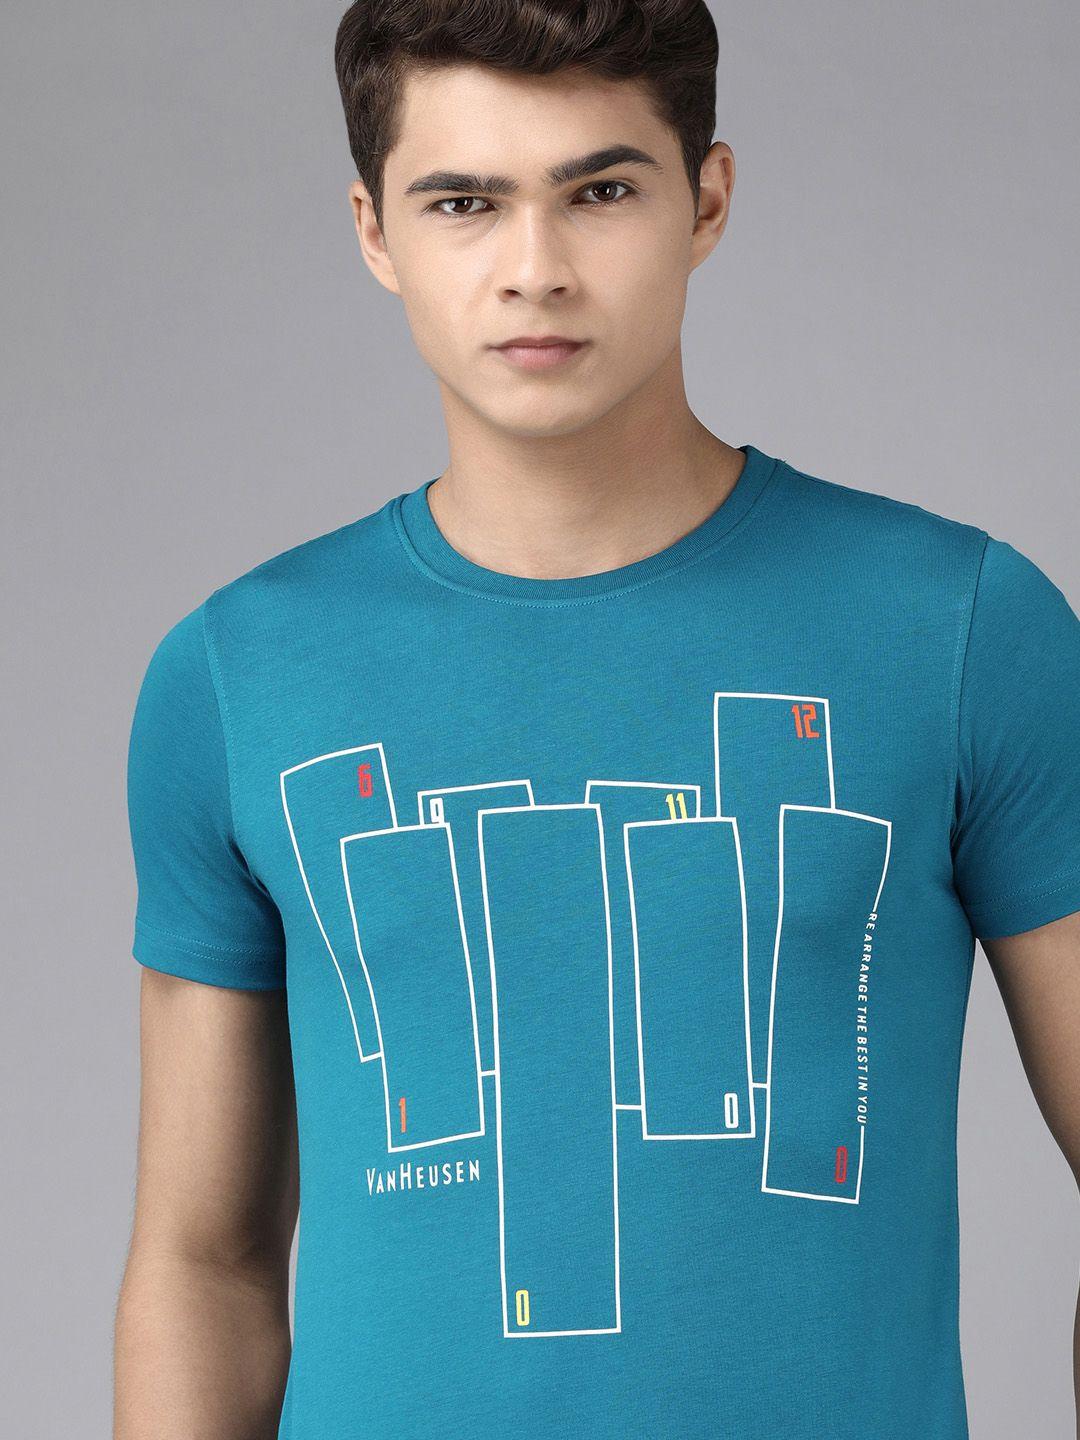 van heusen sport men teal blue graphic printed pure cotton casual t-shirt